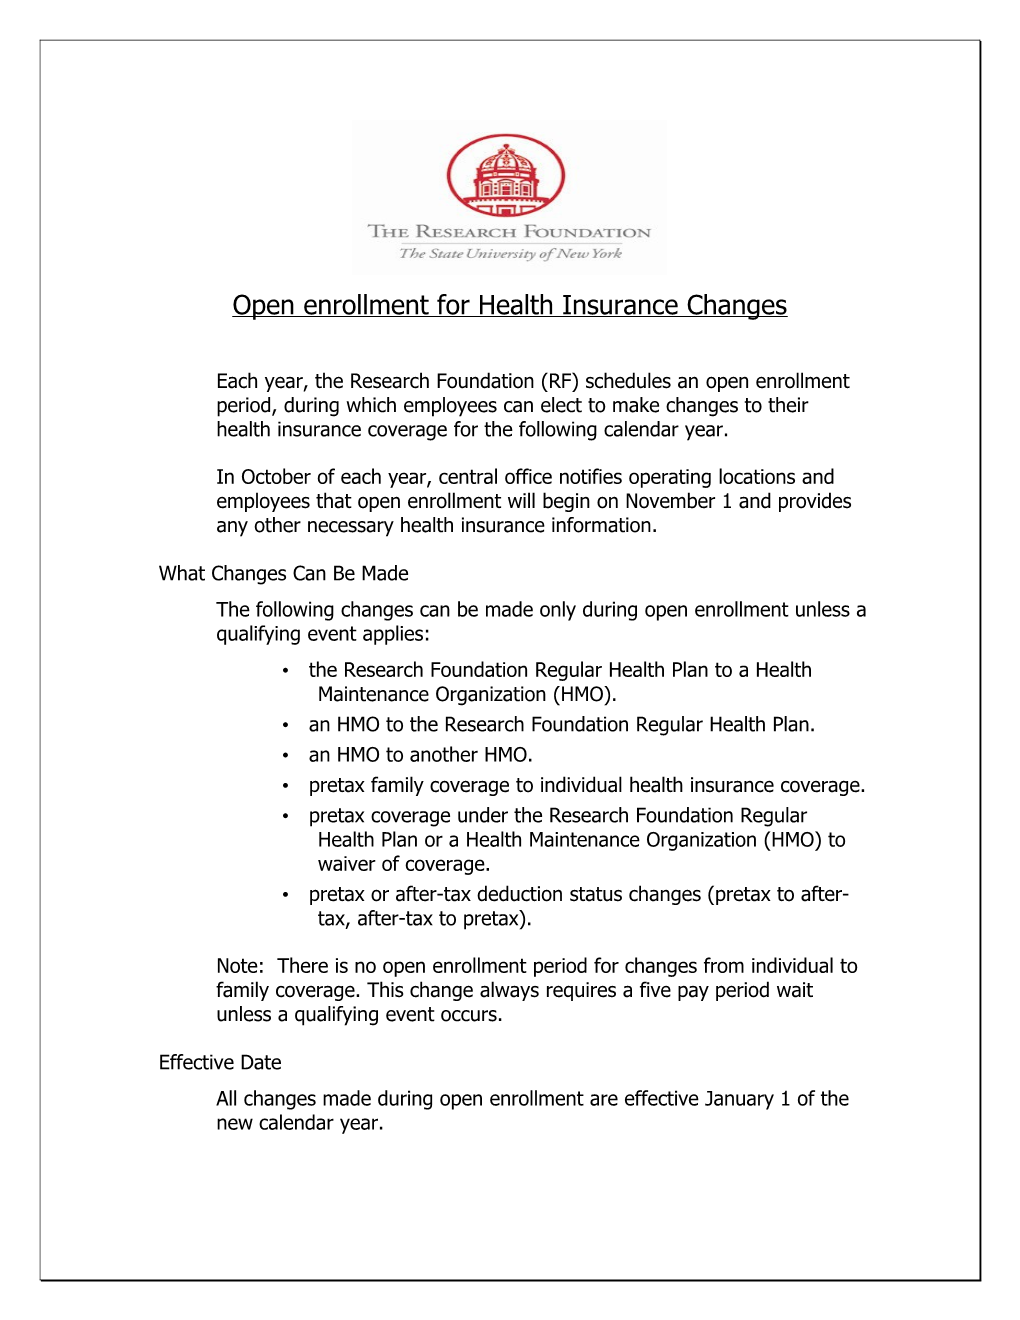 Open Enrollment for Health Insurance Changes